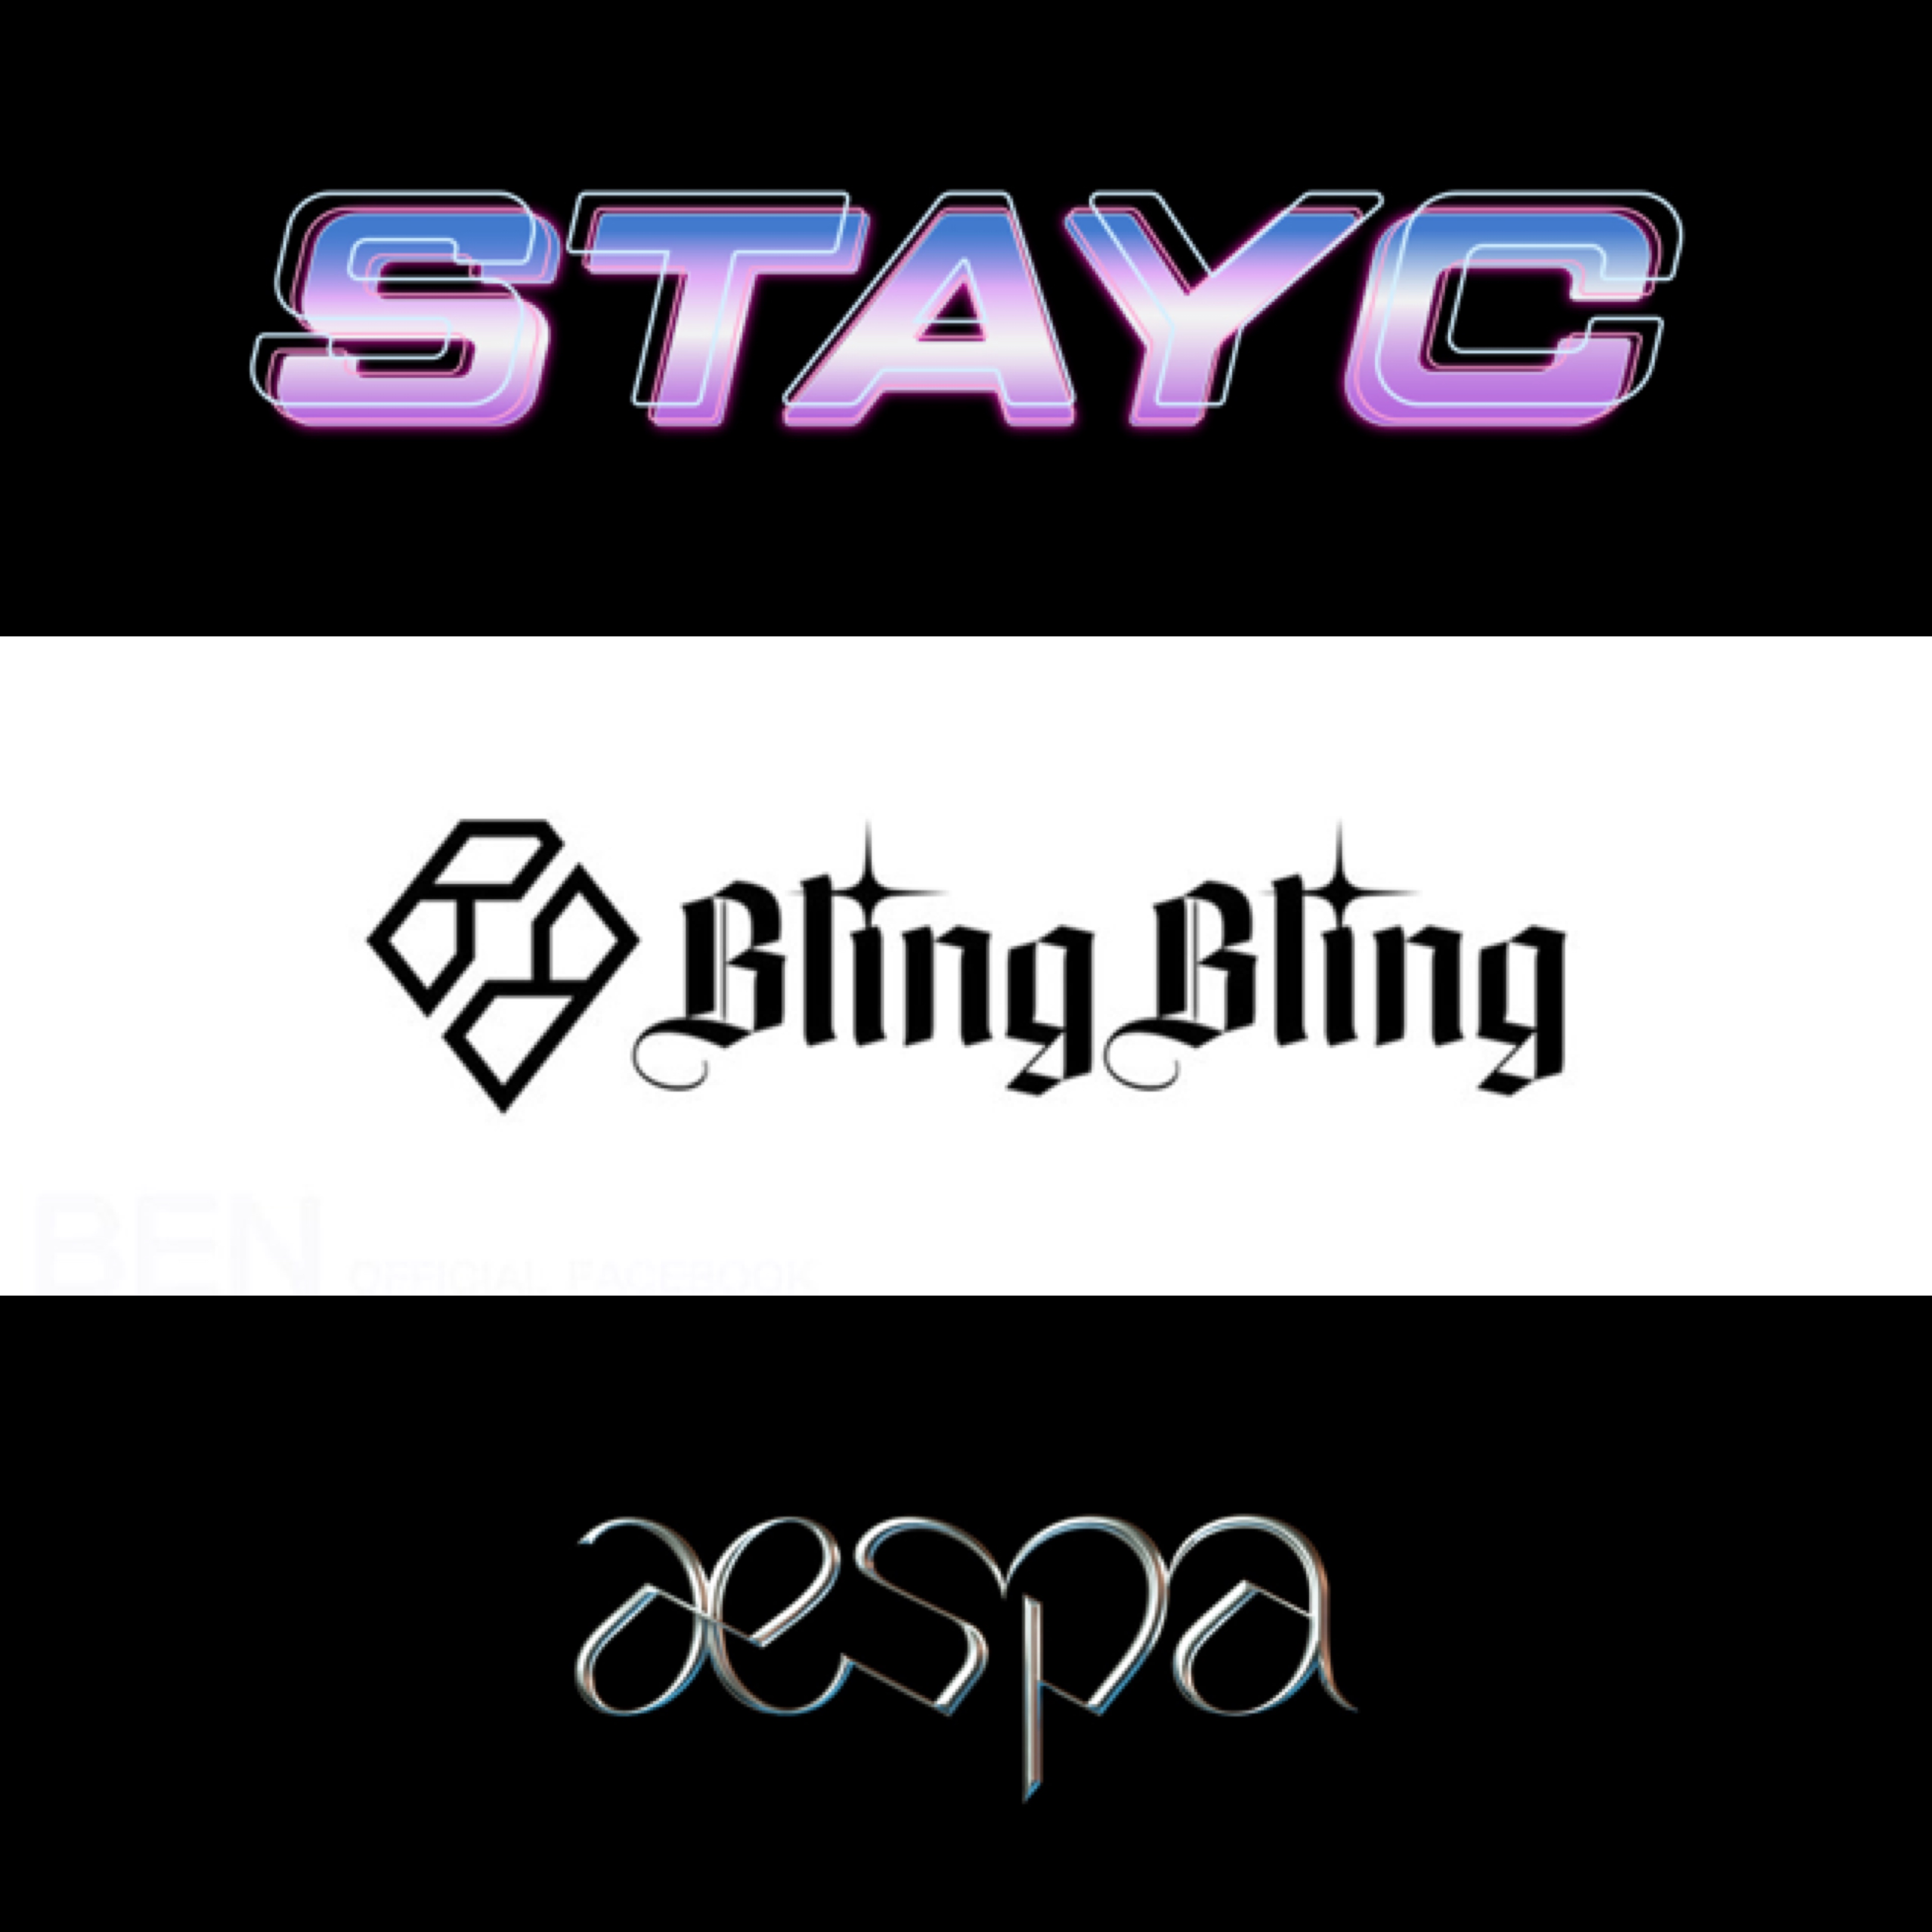 STAYC Bling Bling aespa